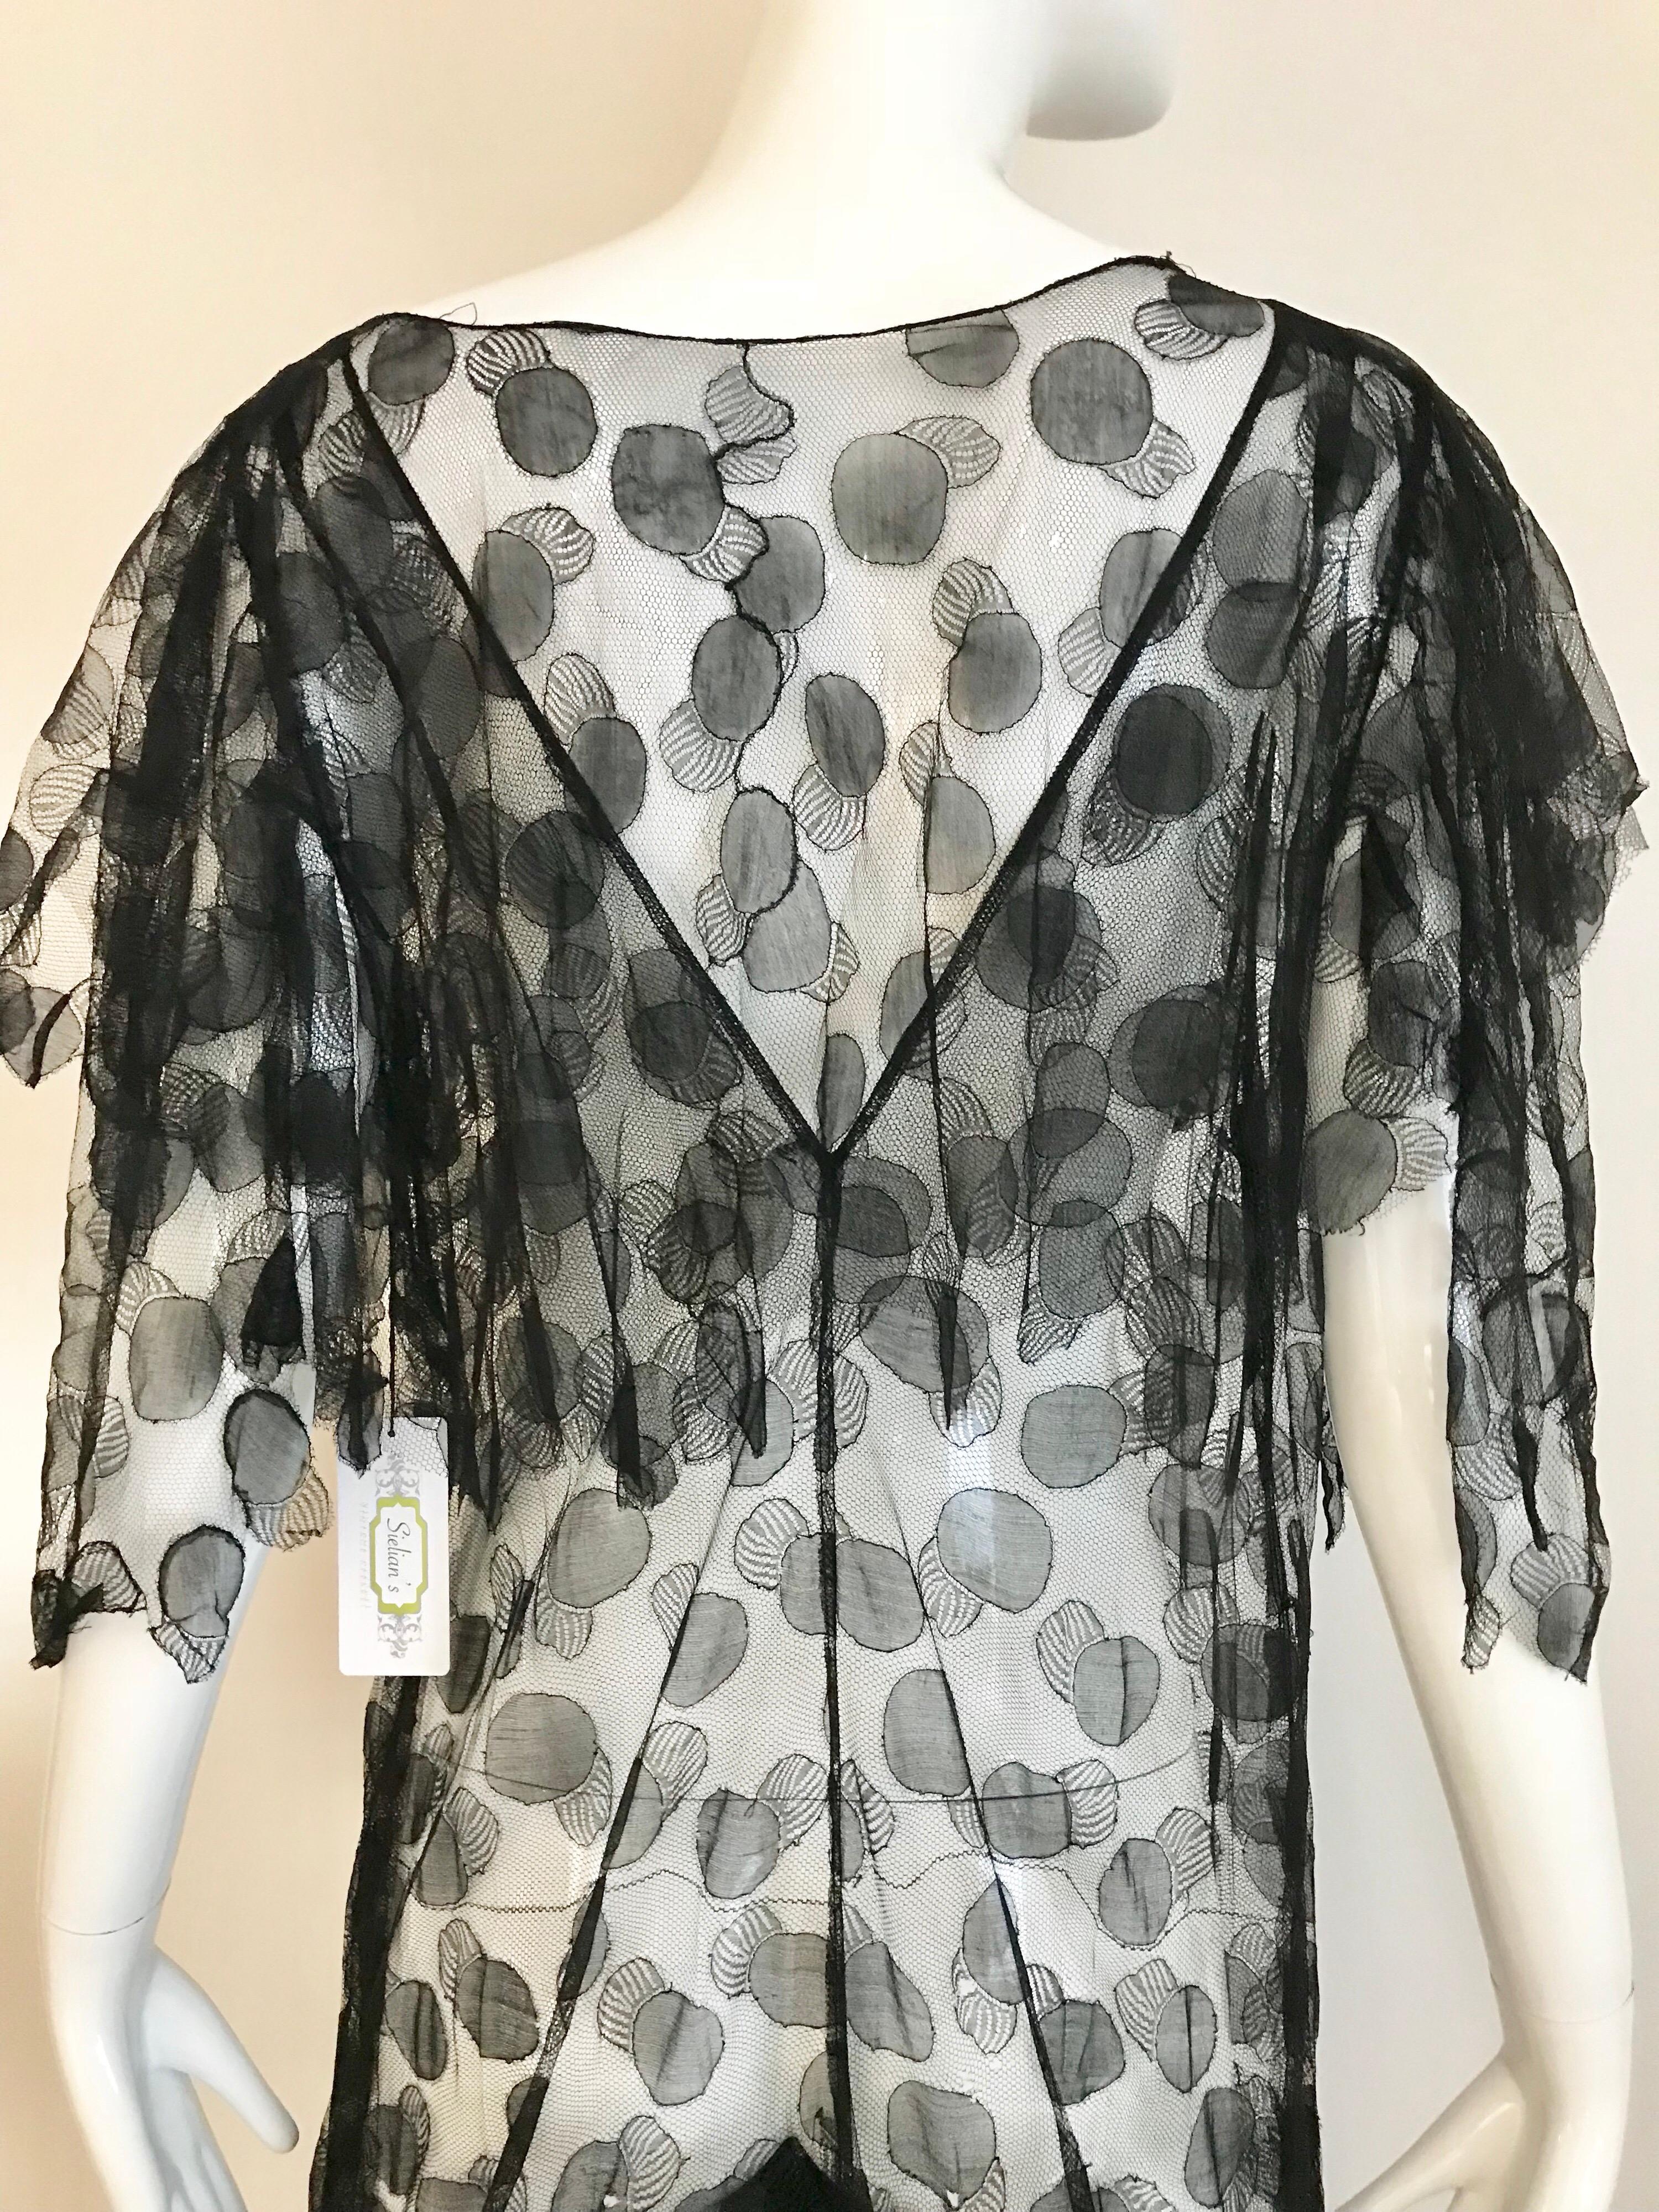 1930s Black Lace Gown 1